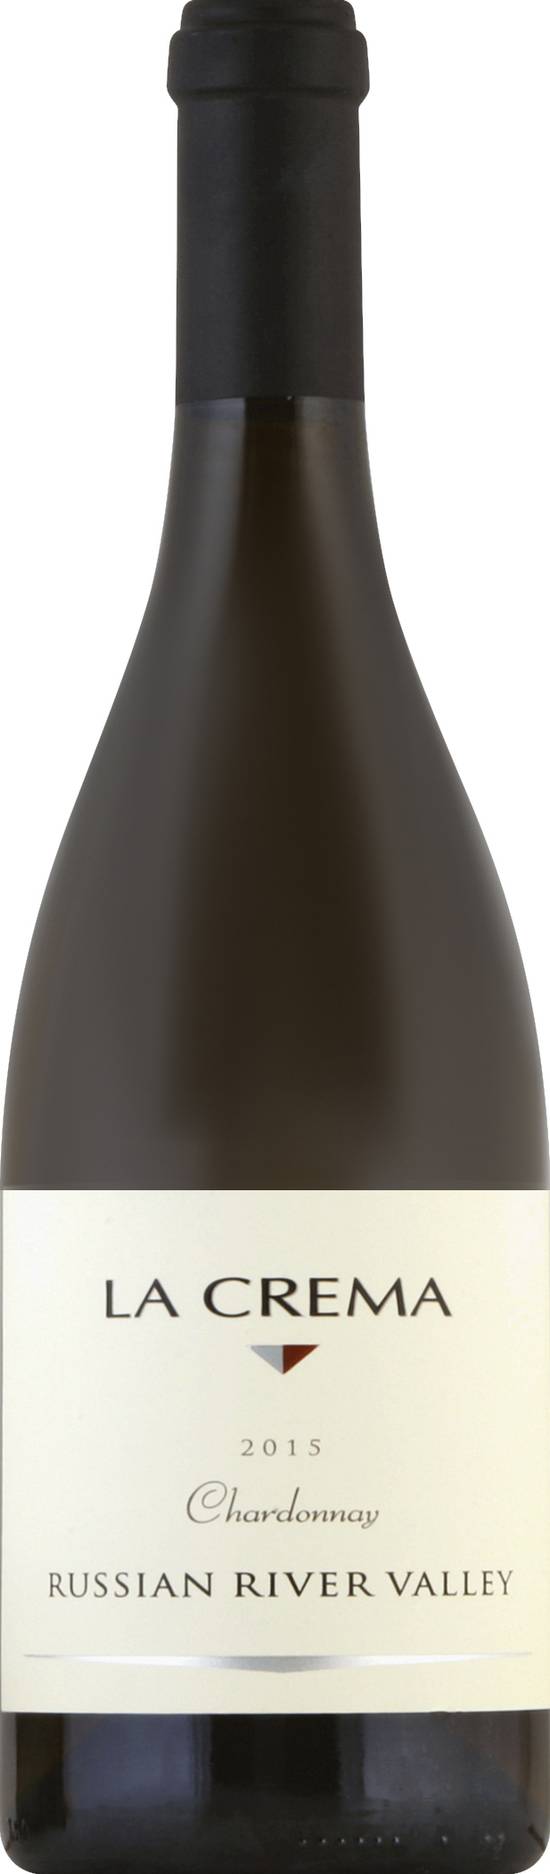 La Crema Russian River Valley Chardonnay Wine 2015 (750 ml)